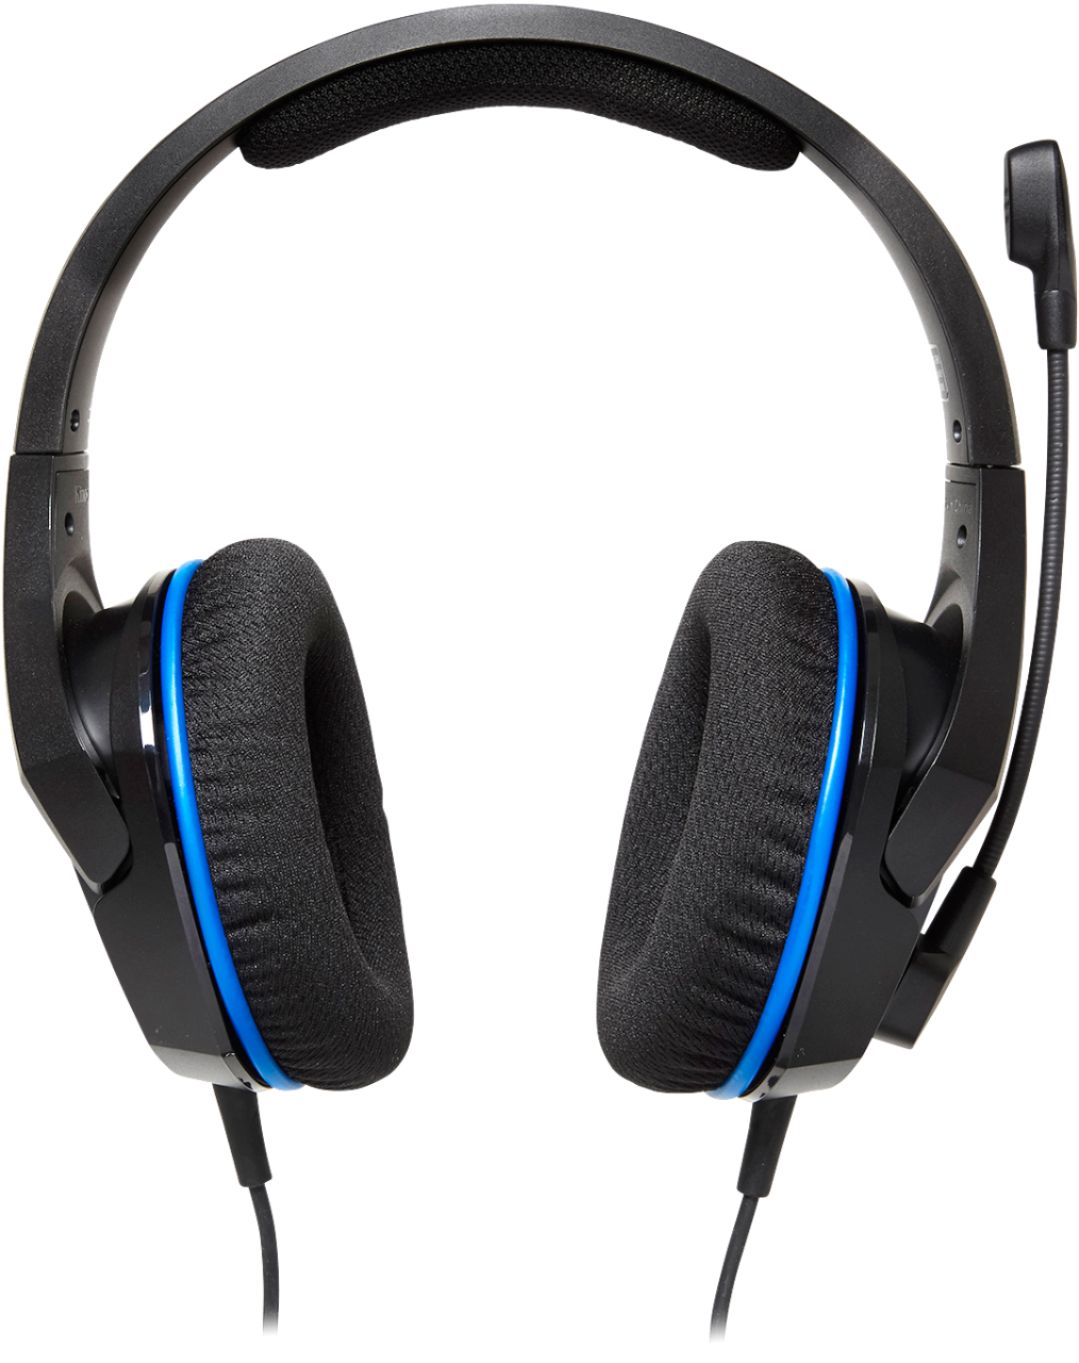 hyperx headset ps4 best buy